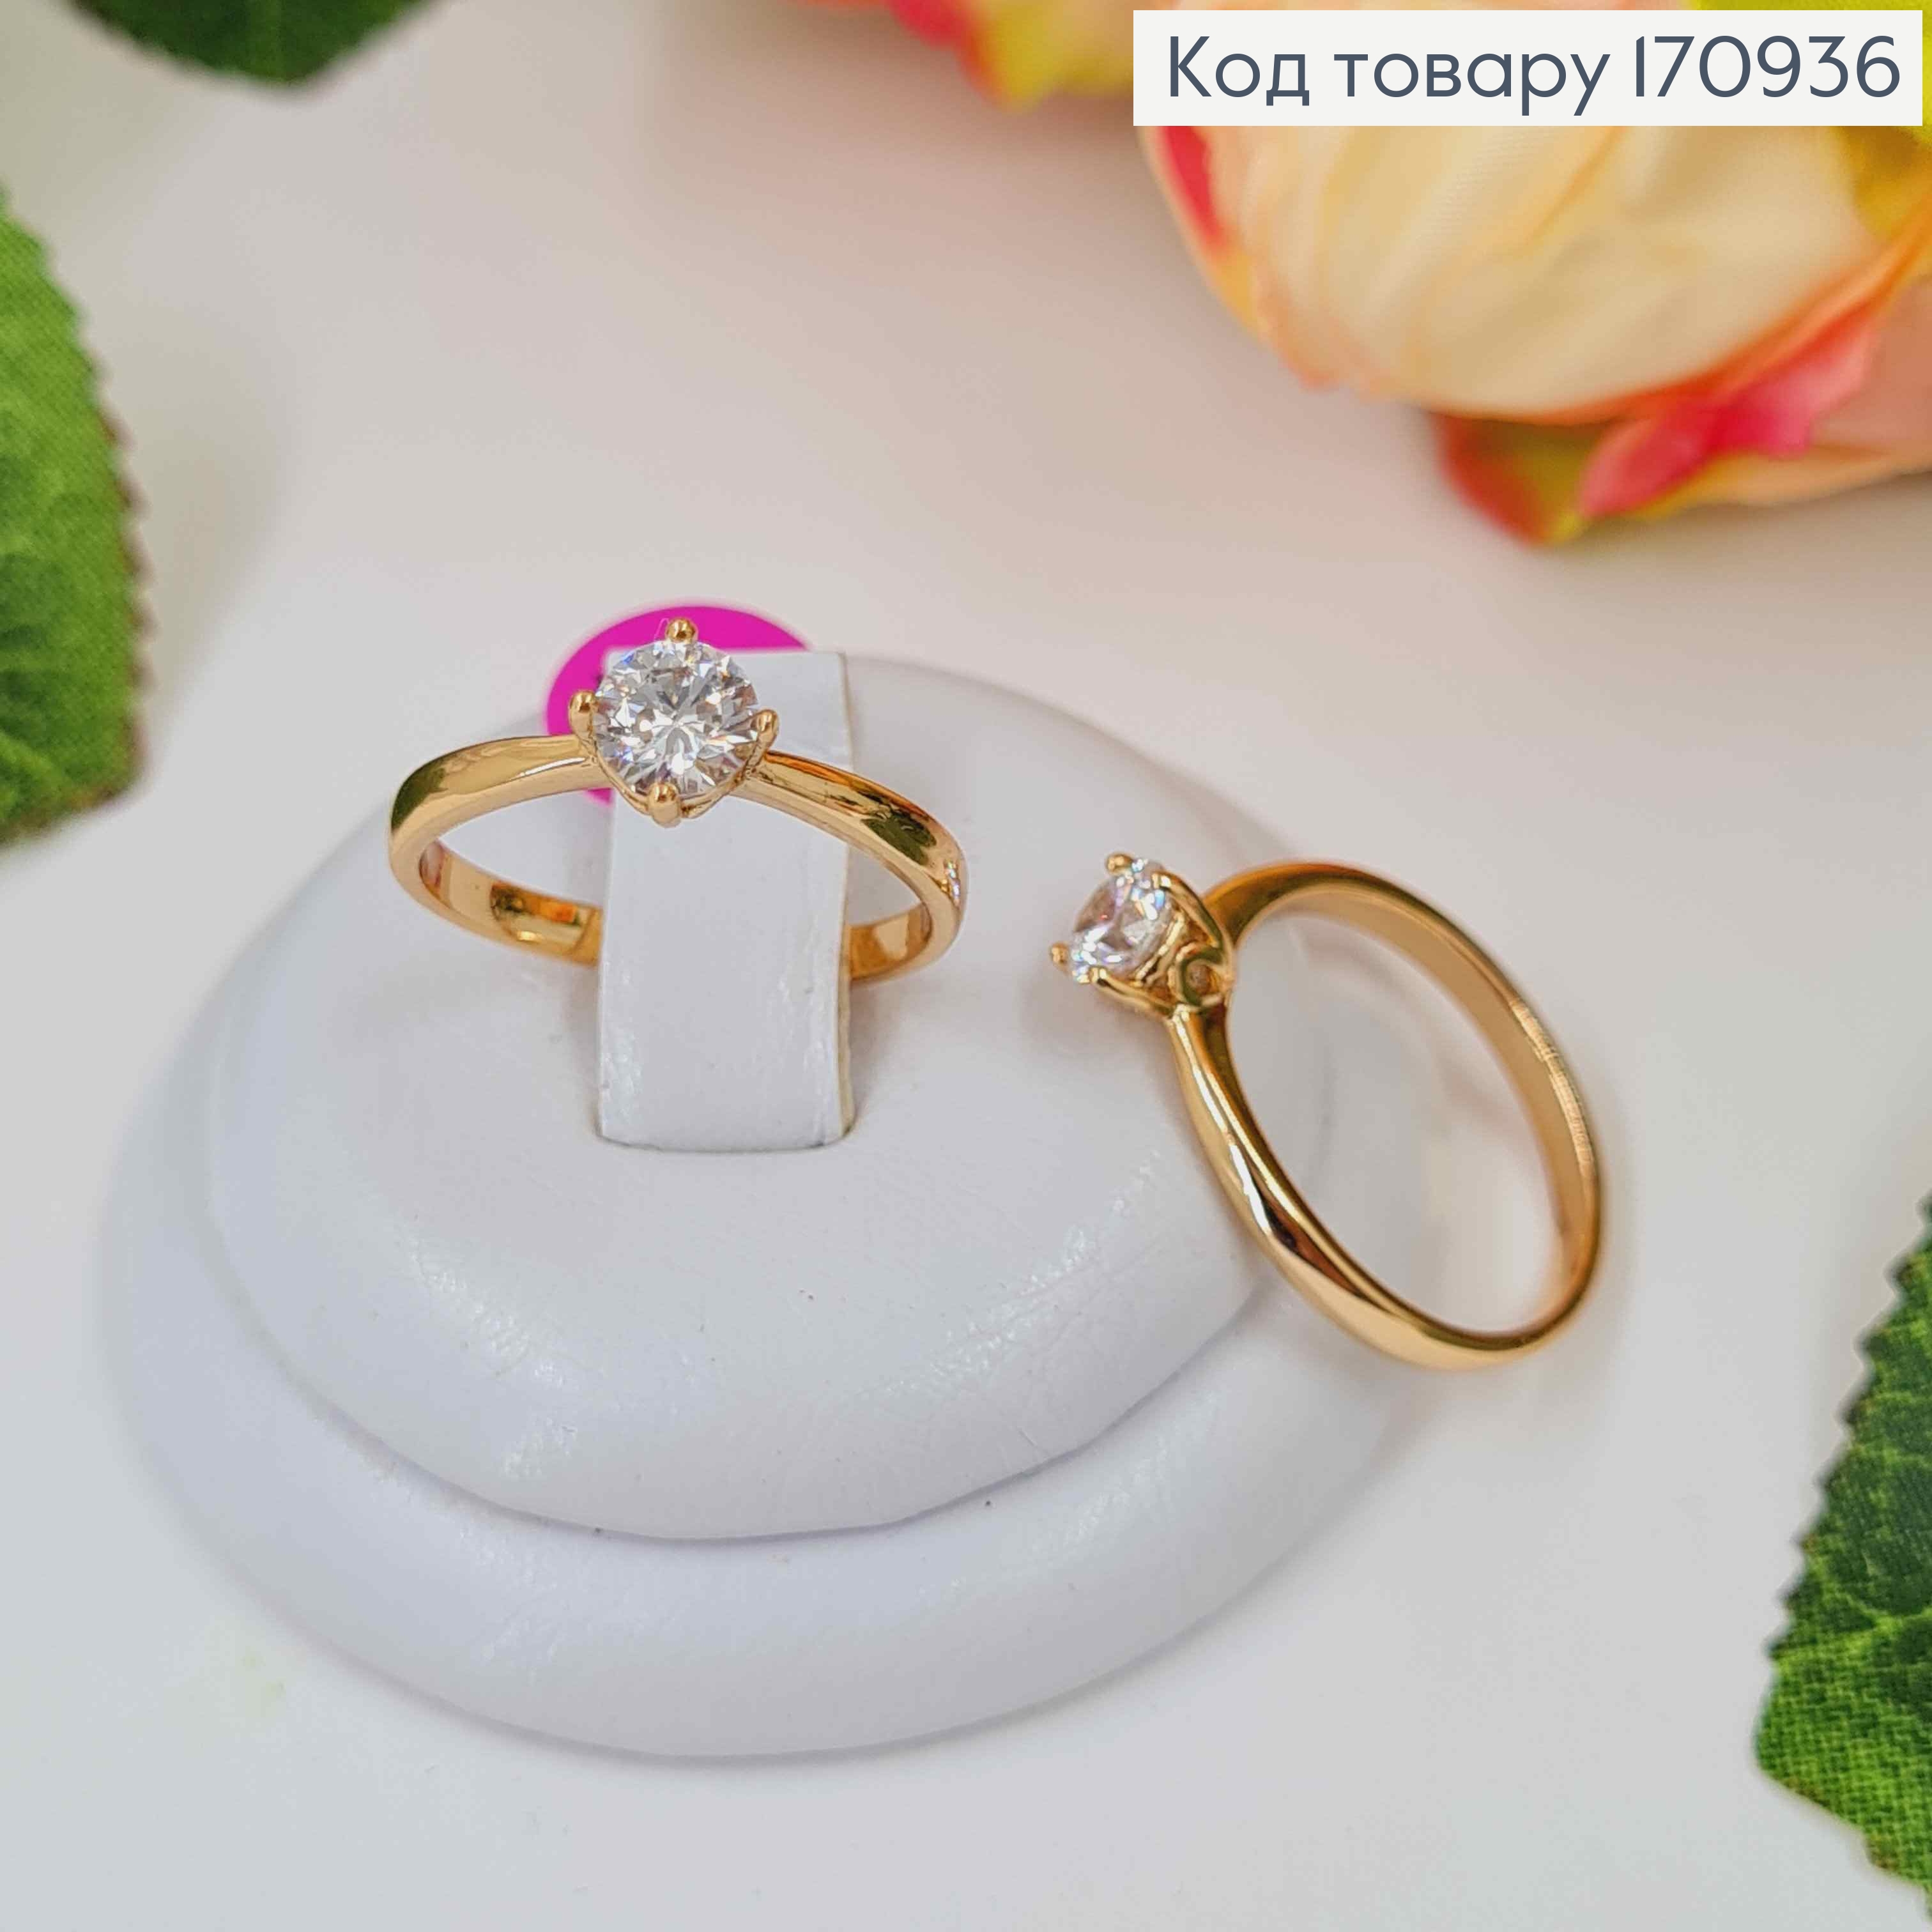 Кольцо, с блестящим камушком, Xuping 18K 170936 фото 2